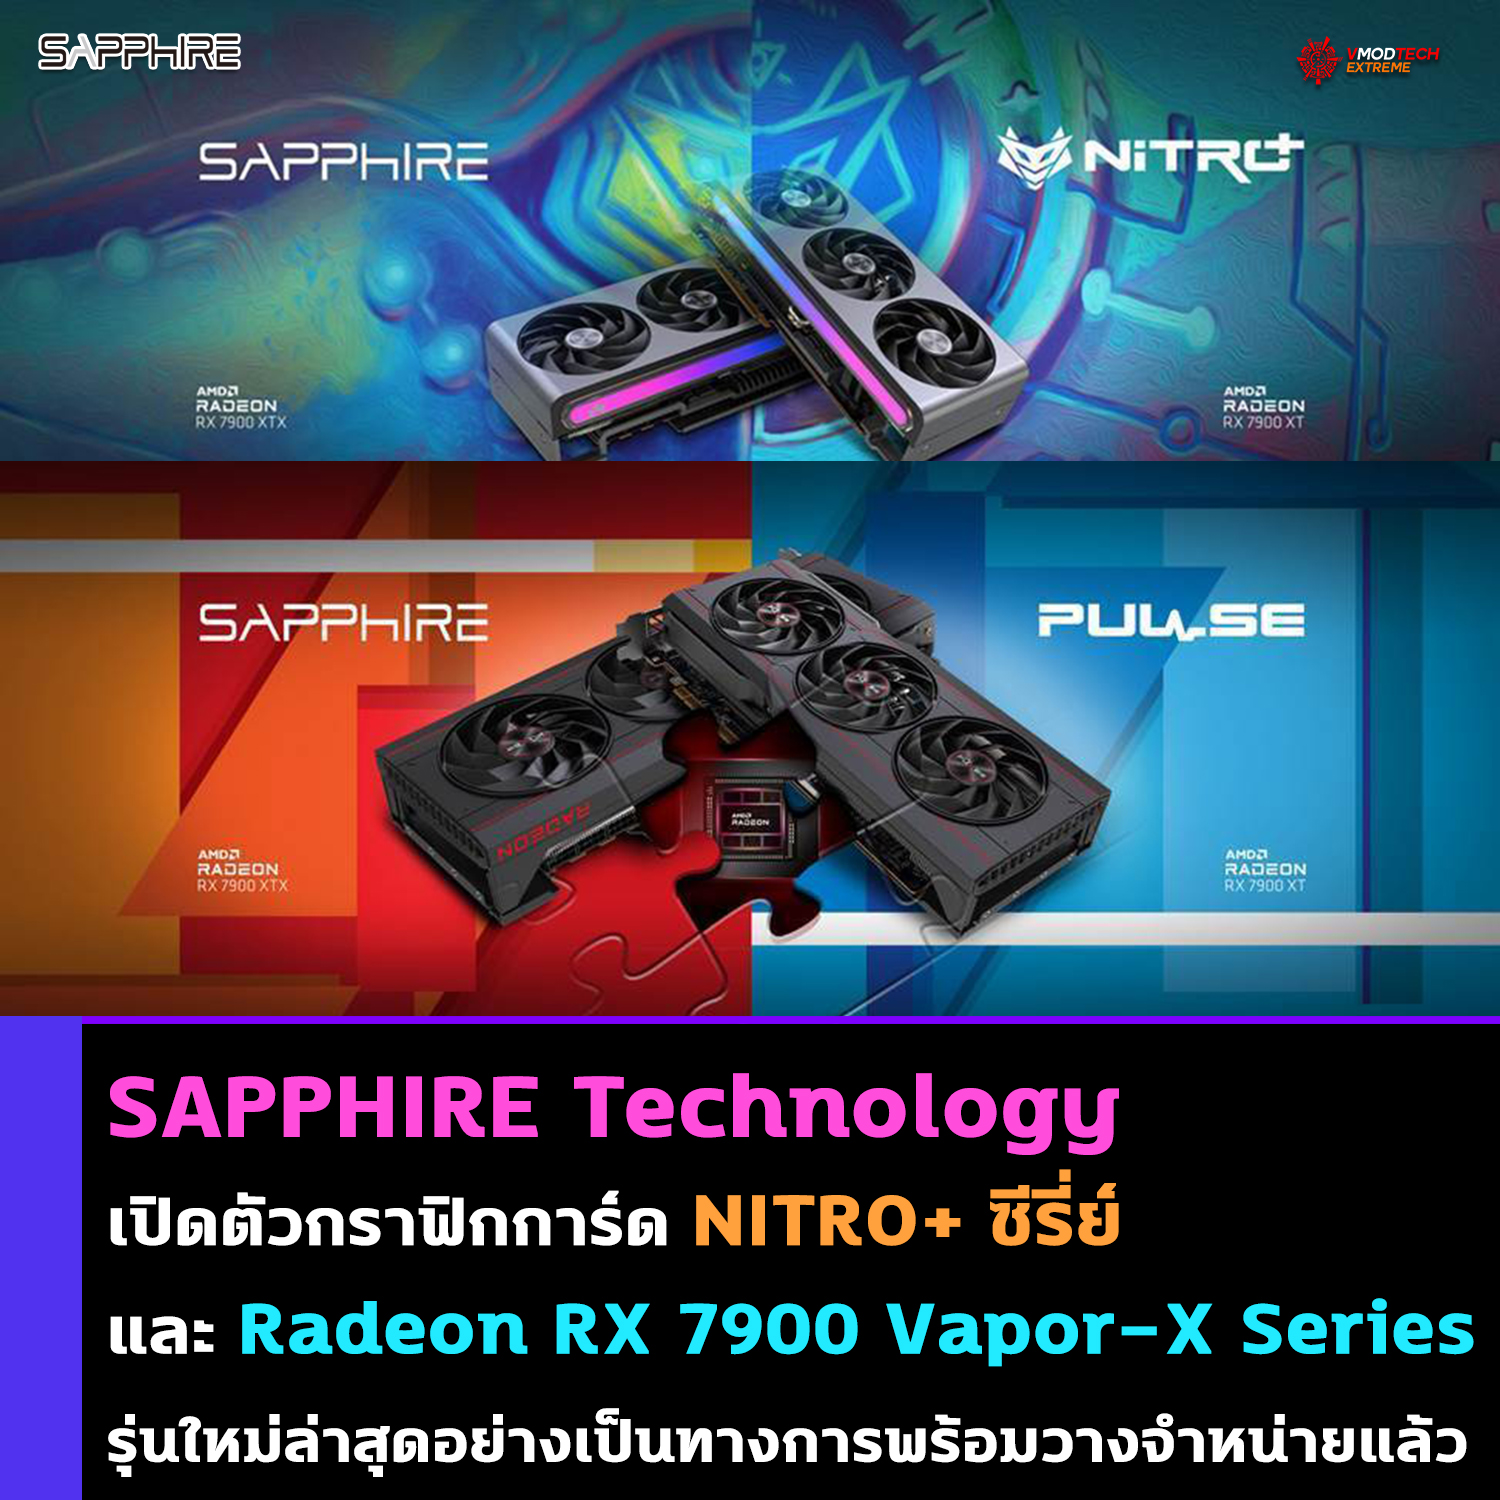 sapphire nitro amd radeon rx 7900 series vapor x graphics cards SAPPHIRE Technology เปิดตัวกราฟิกการ์ด NITRO+ ซีรี่ย์และ AMD Radeon™ RX 7900 Vapor X Series รุ่นใหม่ล่าสุดอย่างเป็นทางการ 